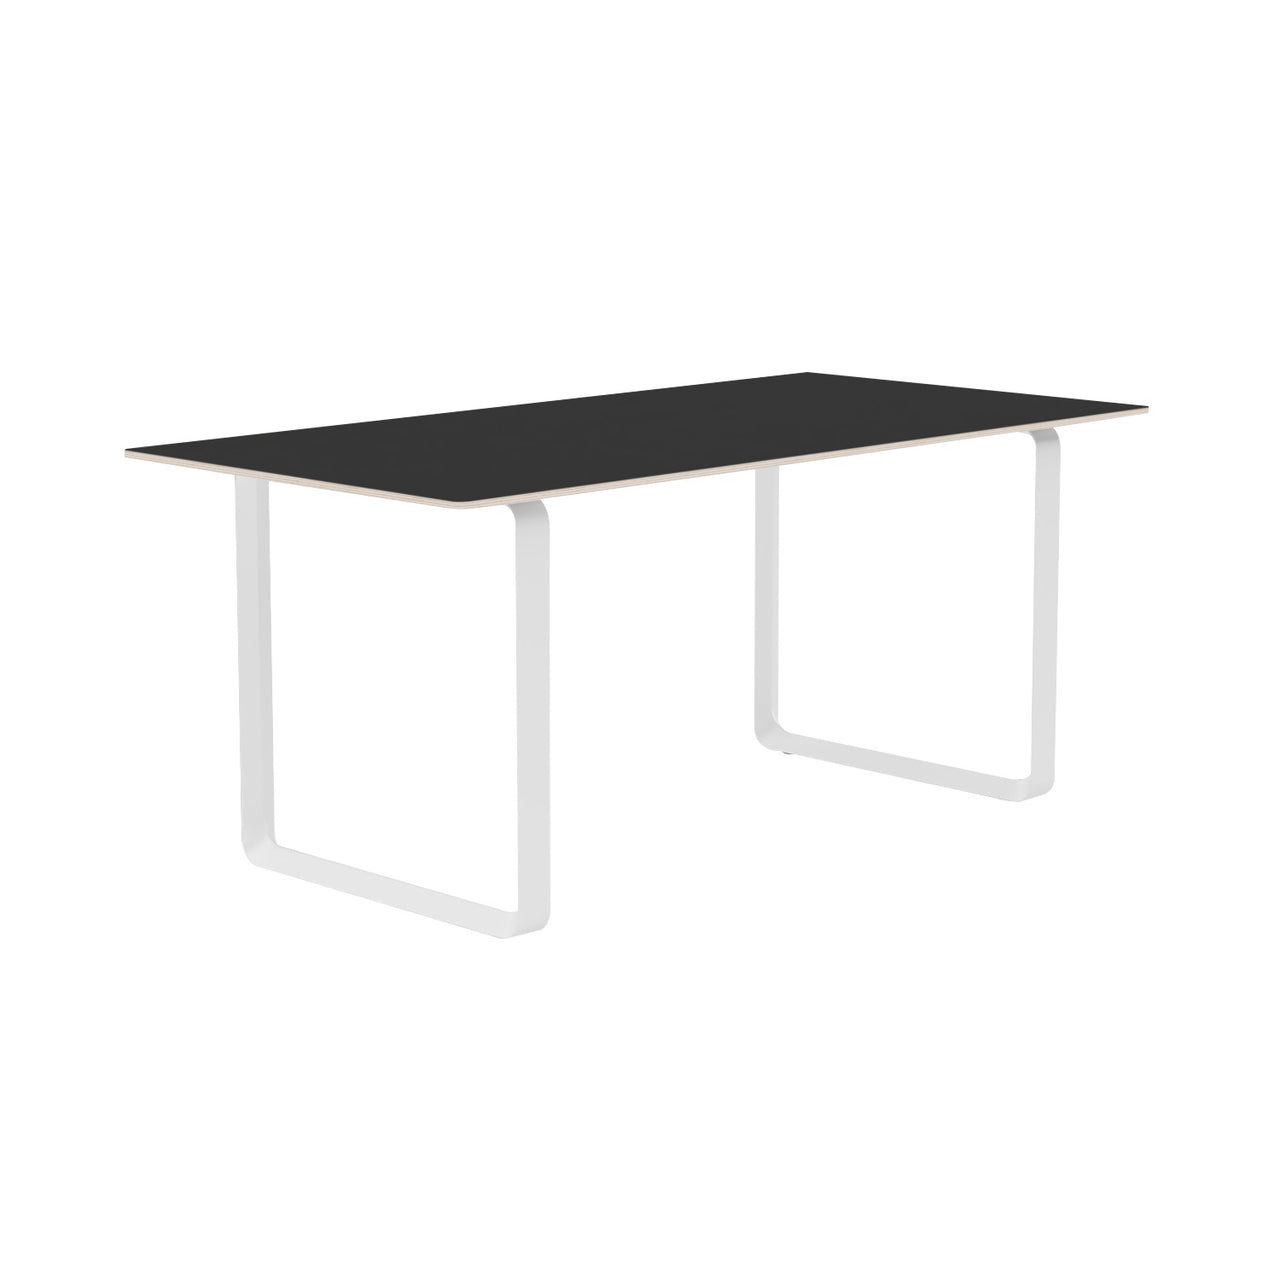 70/70 Table: Small + Black Nanolaminate + White